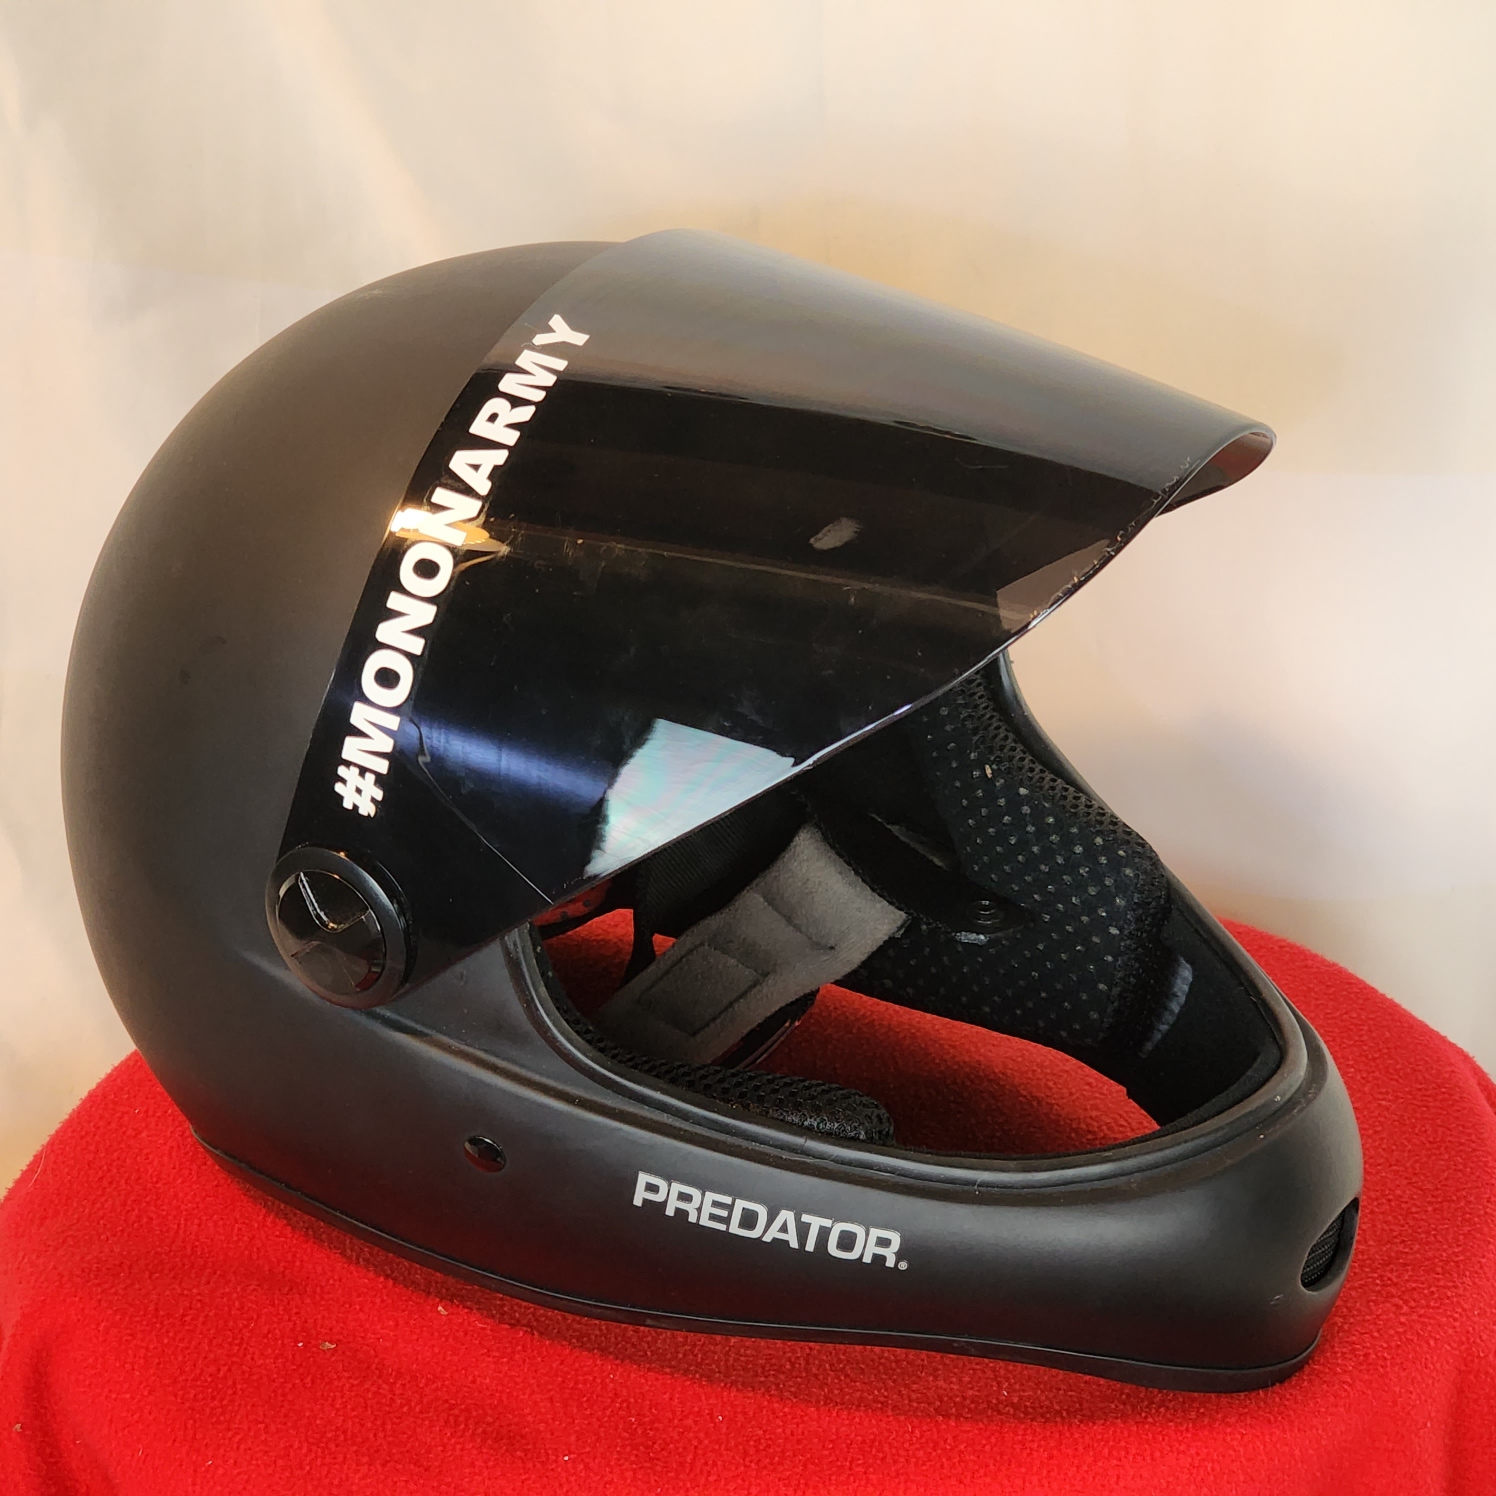 Predator Matte Black DH-6 Lightweight Fiberglass Riding Helmet with Additional Clear Visor OSFM